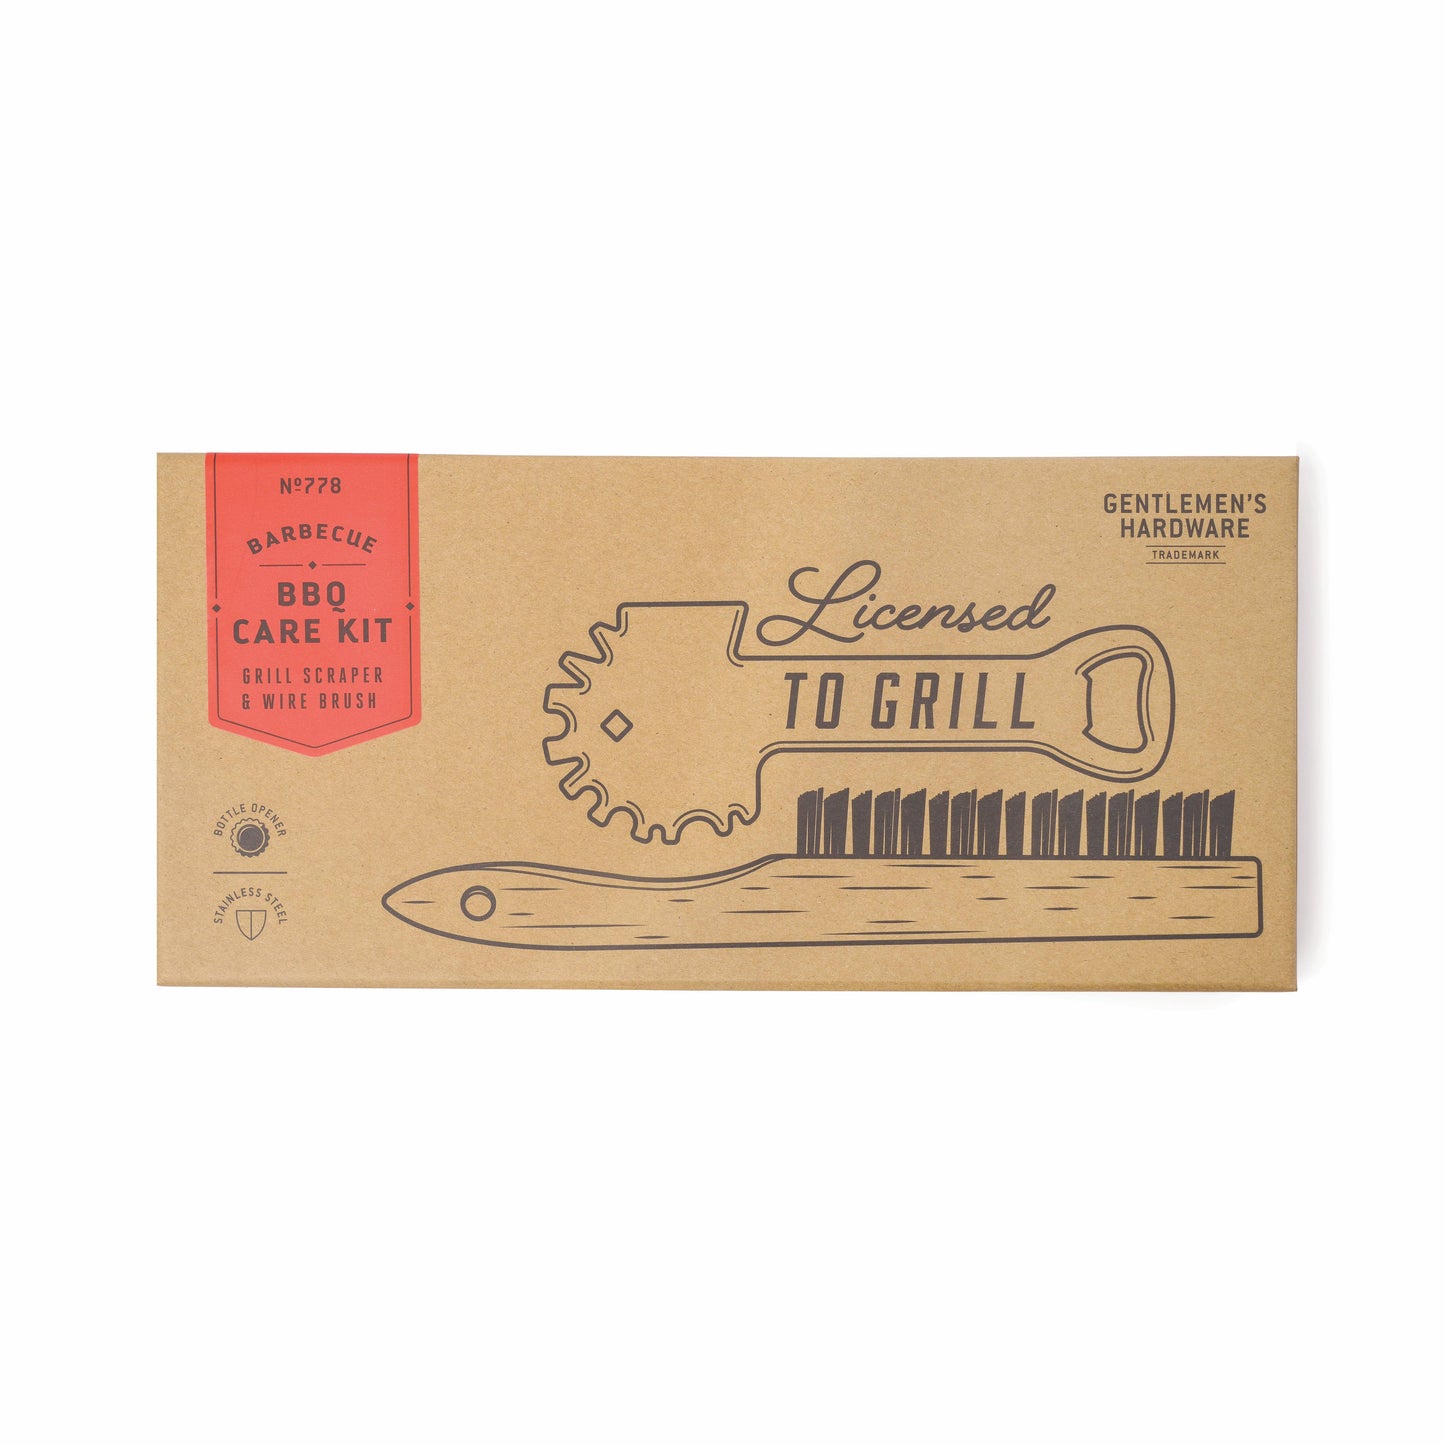 "BBQ Care Kit" Grill Scraper & Wire Brush